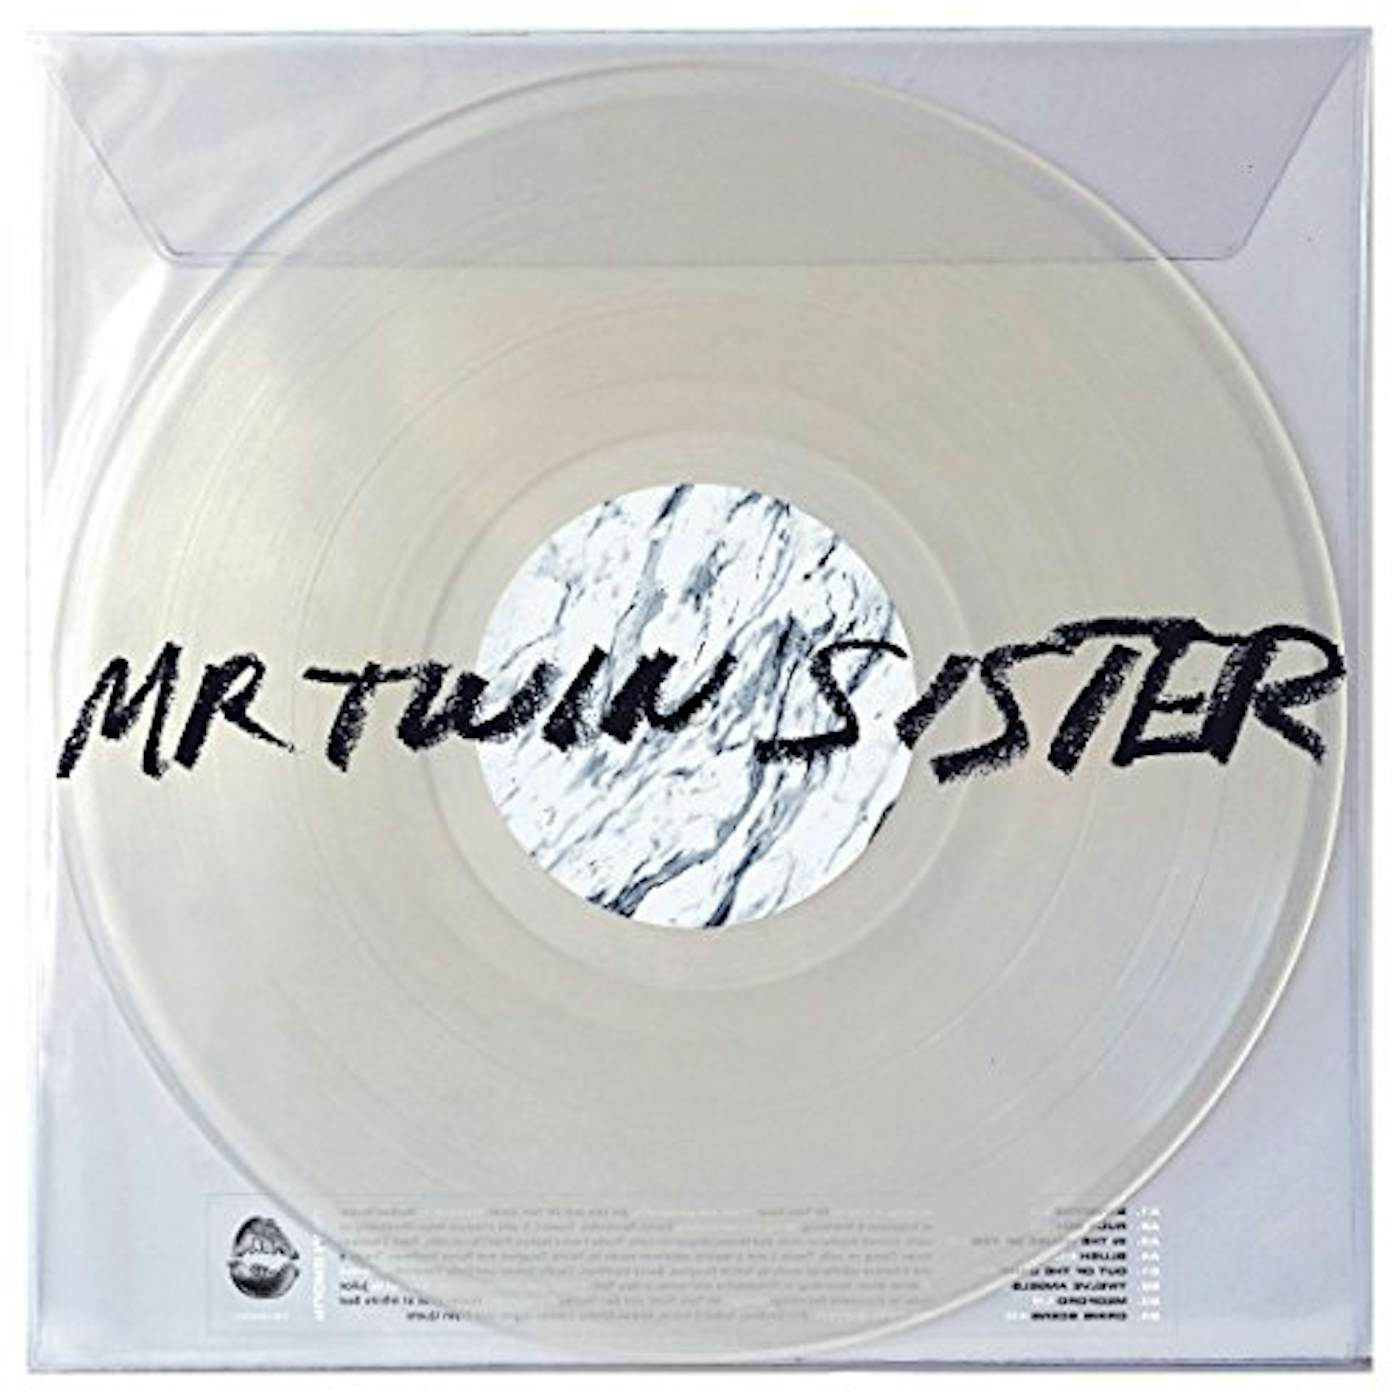 MR TWIN SISTER CD